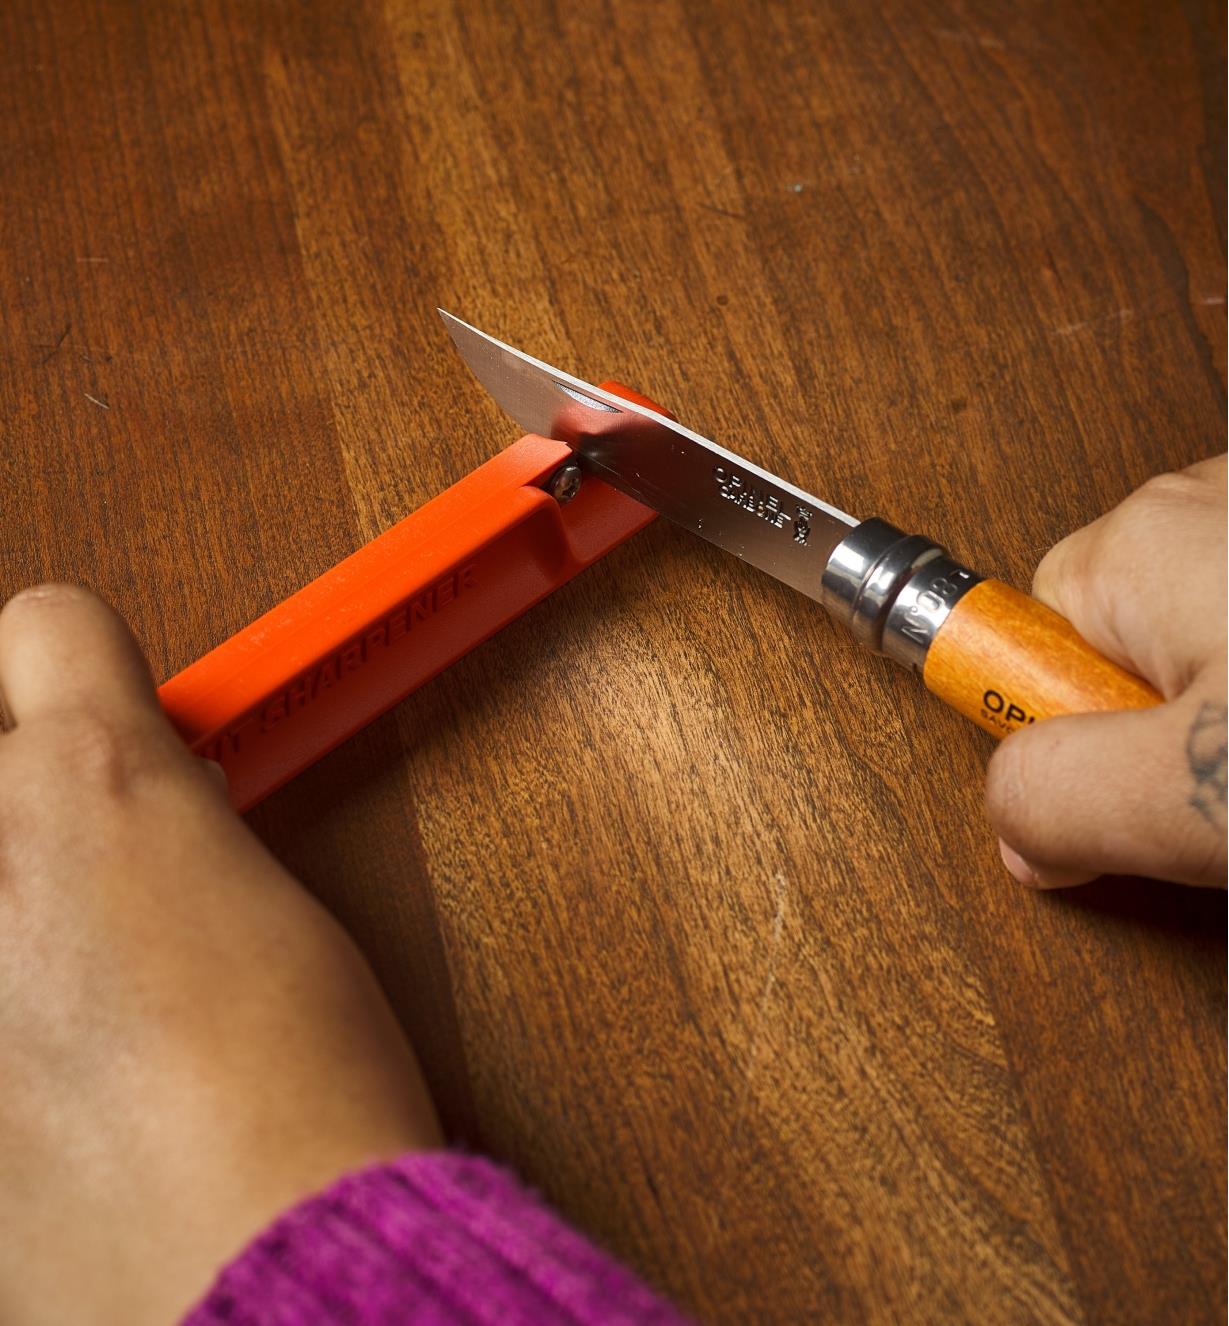 Sharpening a knife blade using the knife sharpener